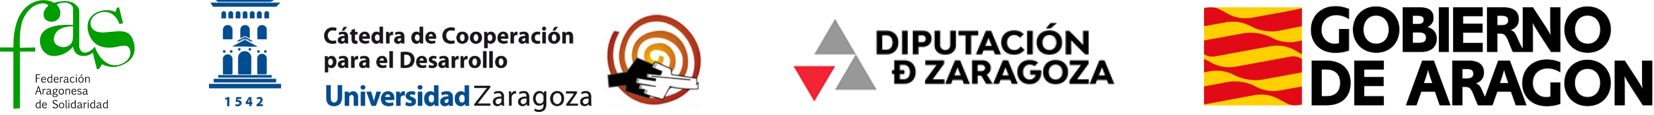 Logo Convenio DPZ + GA.png